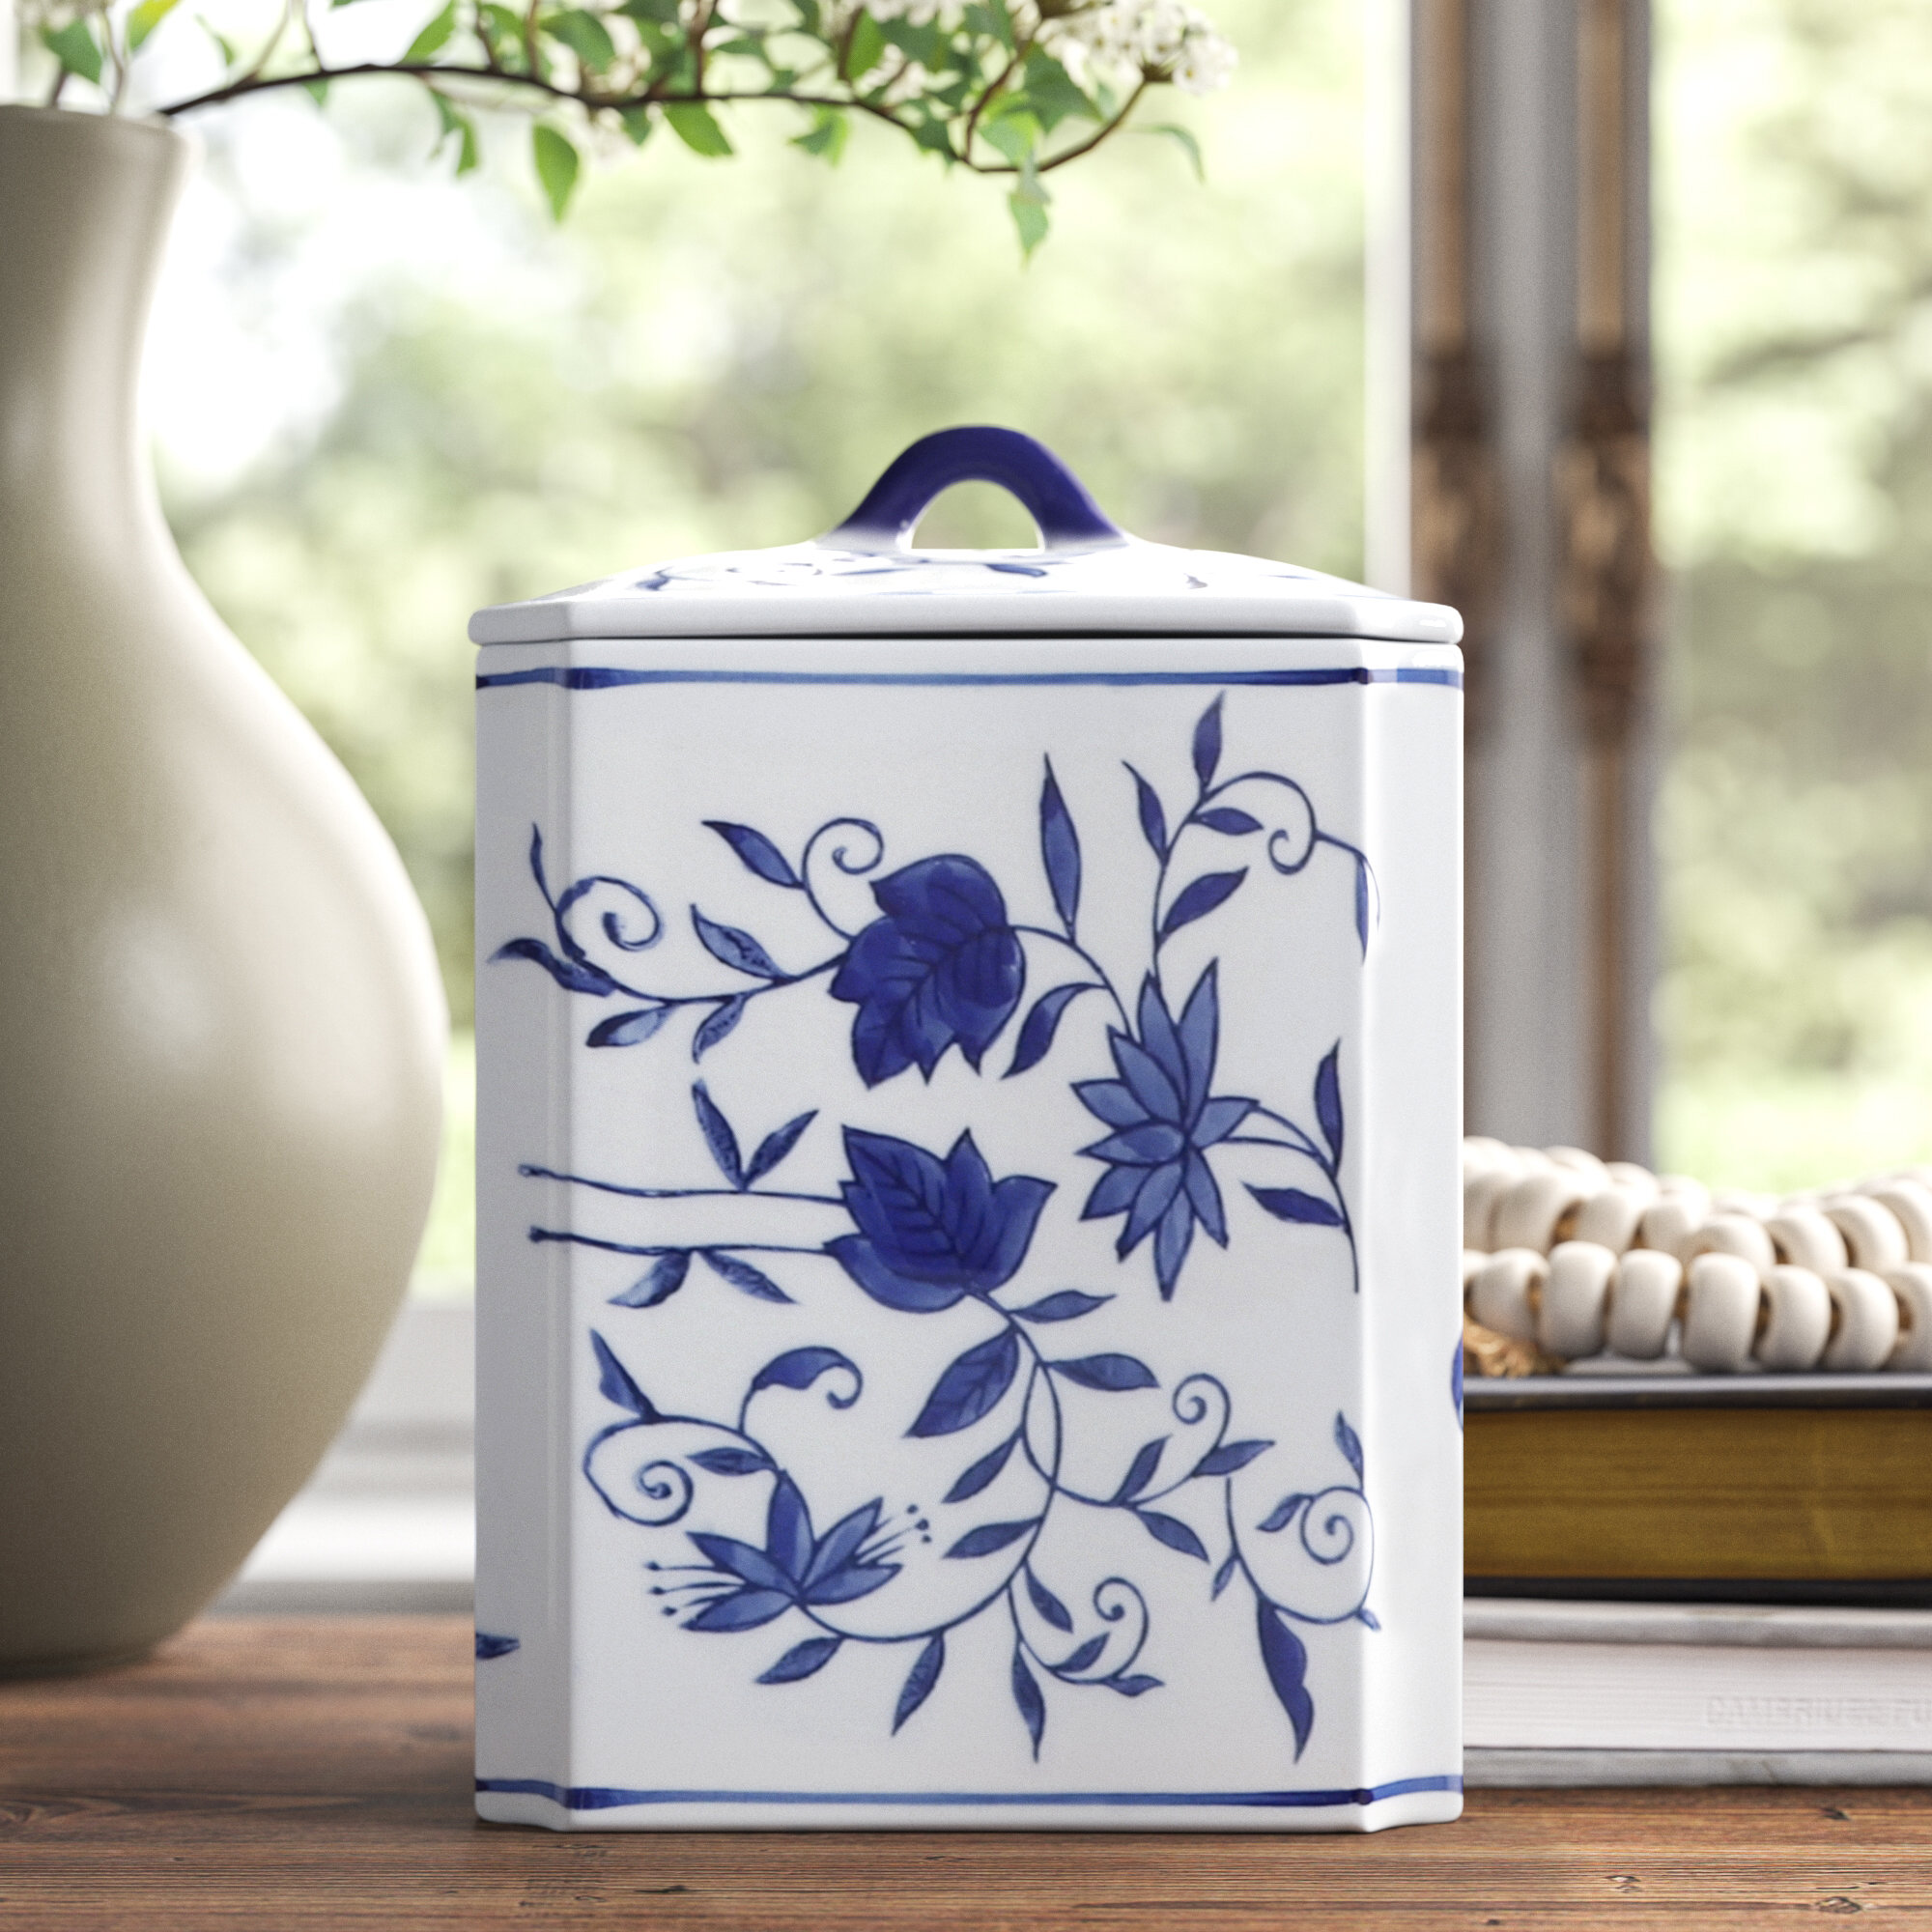 Large blue and white ginger jar – La Petite Maison Francaise